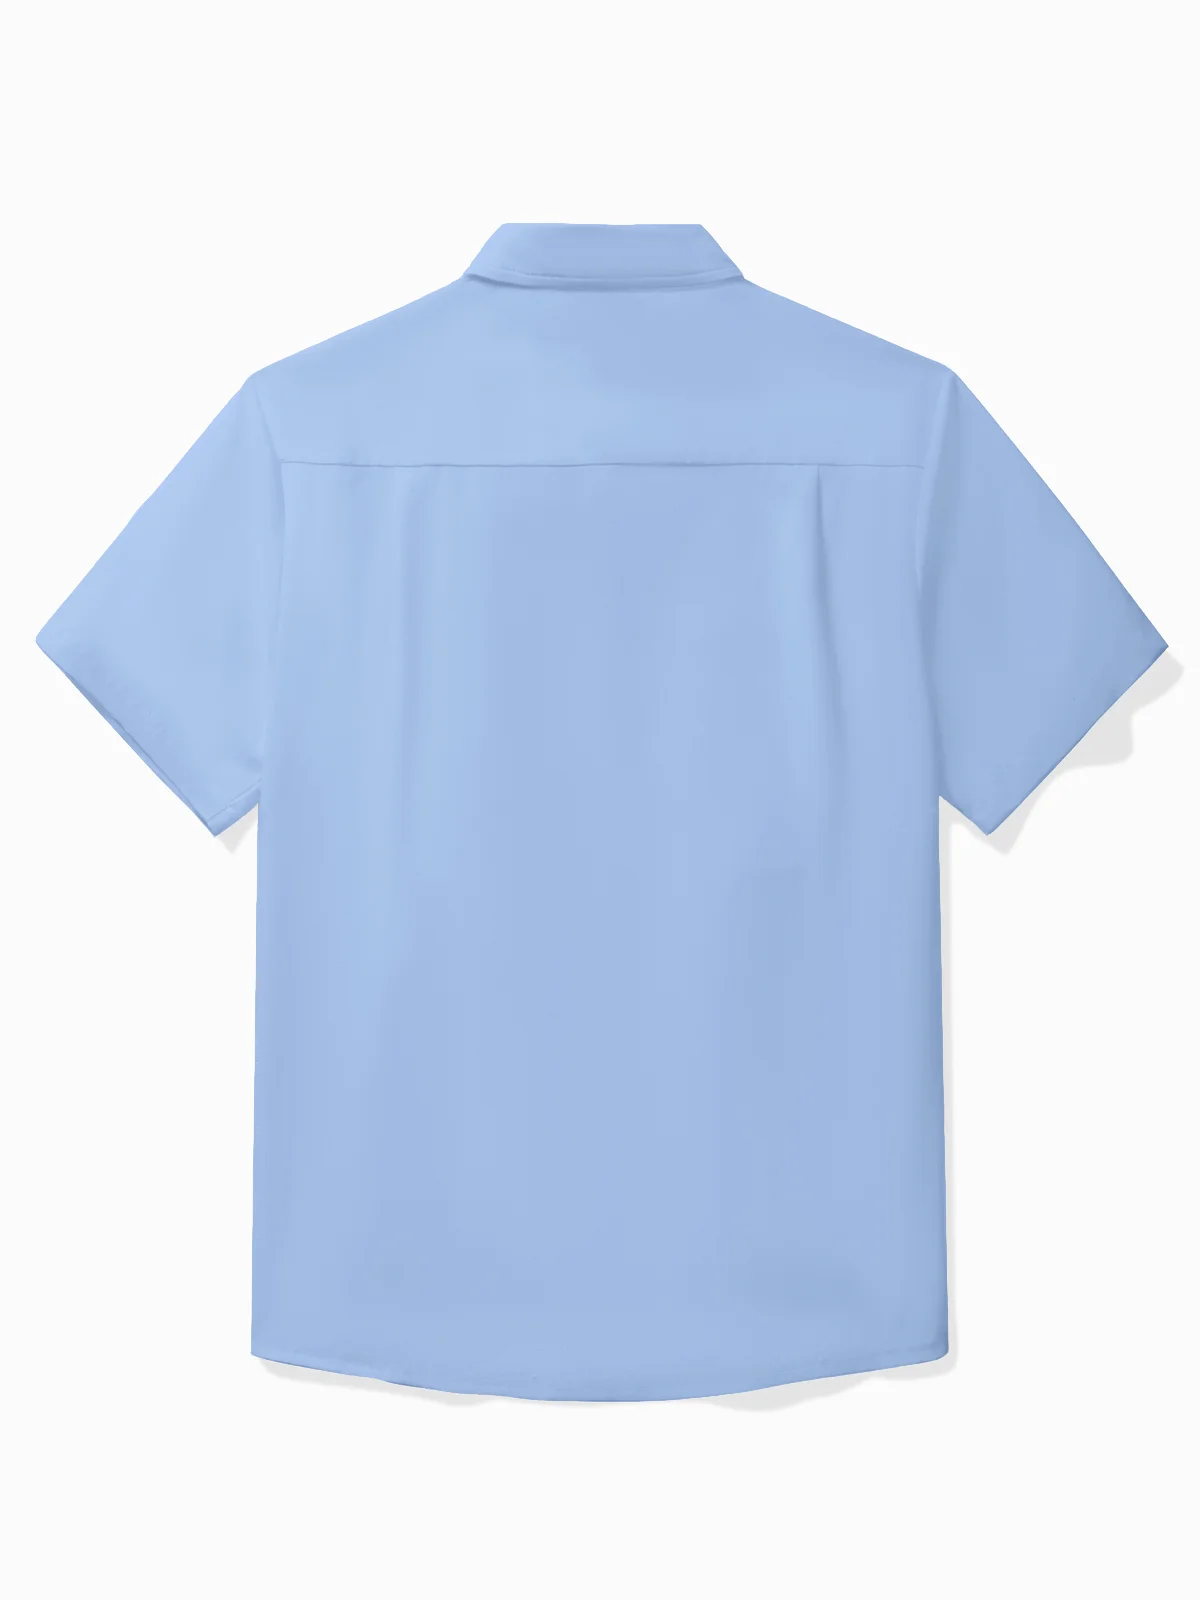 Royaura® Vintage Bowling Print Chest Pocket Shirt Plus Size Men's Shirt